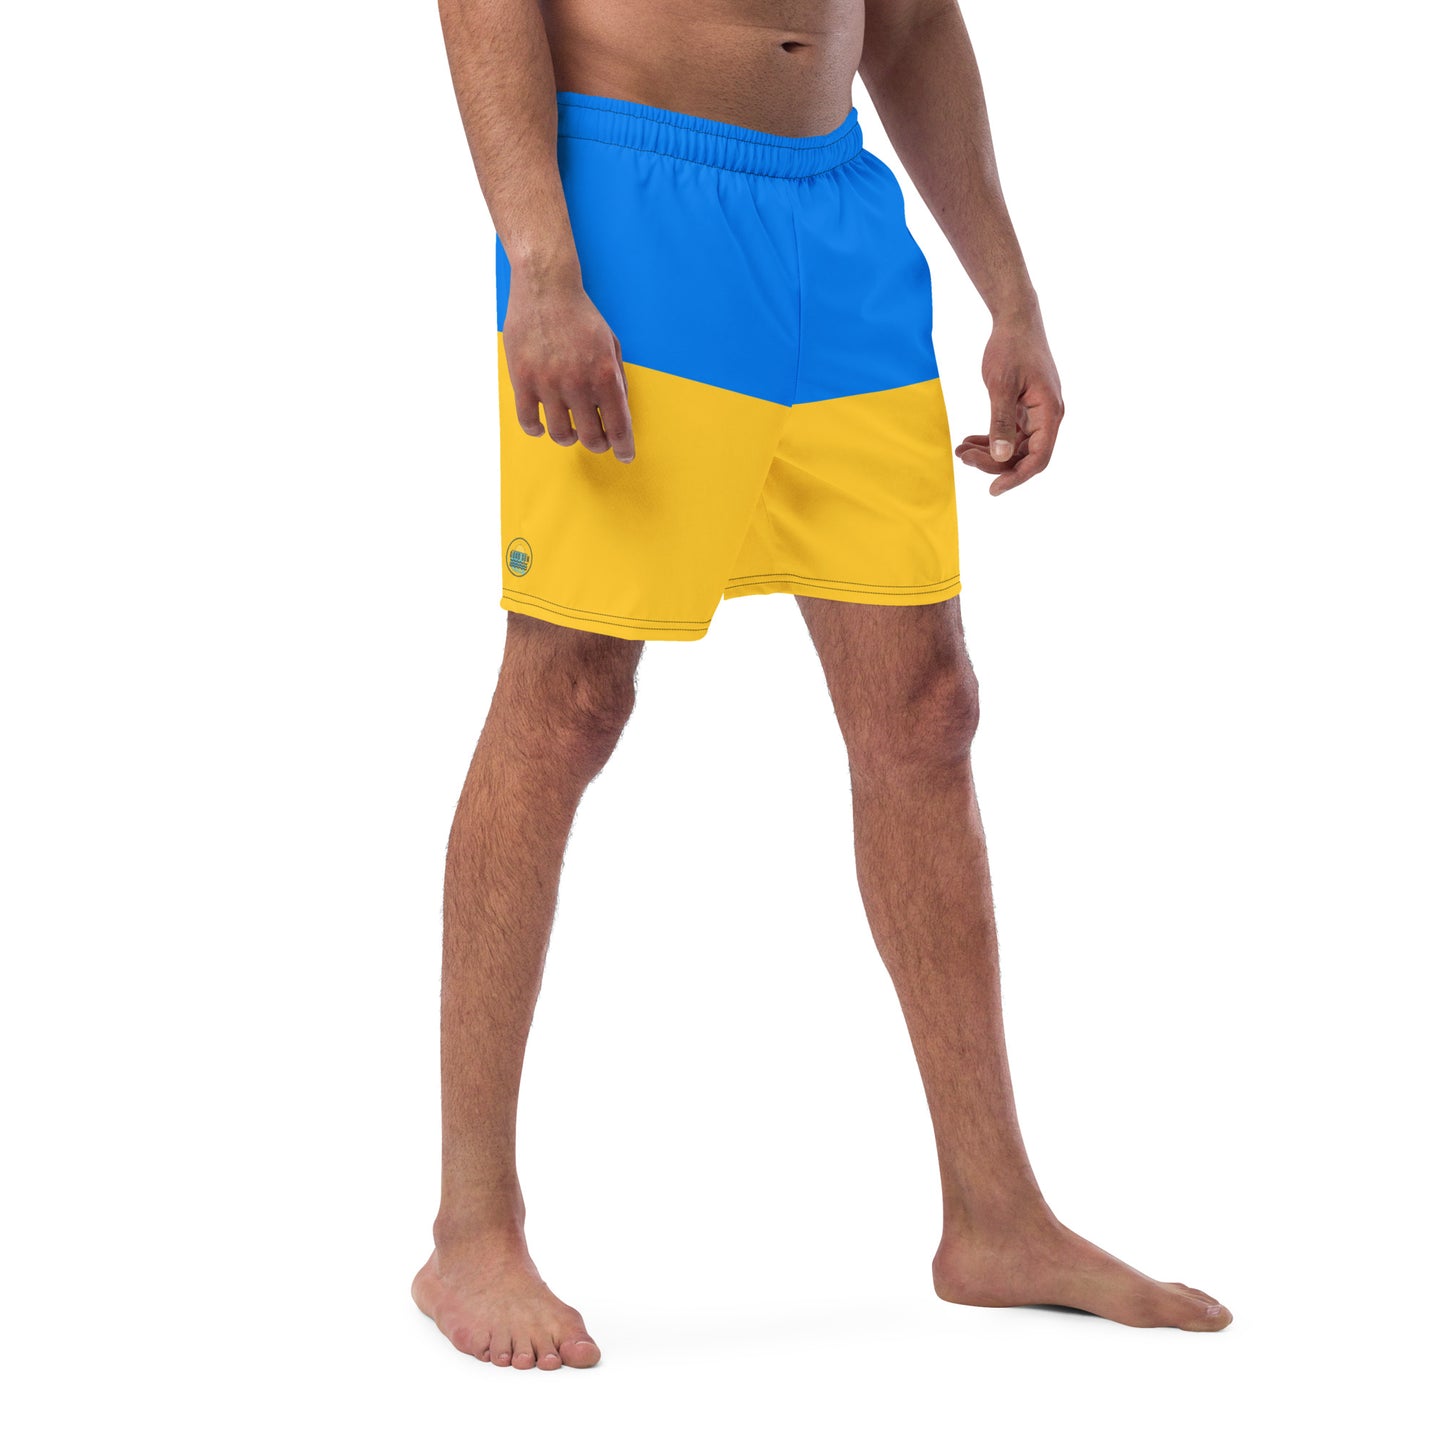 Blue Yellow Colorblock Men's swim trunks